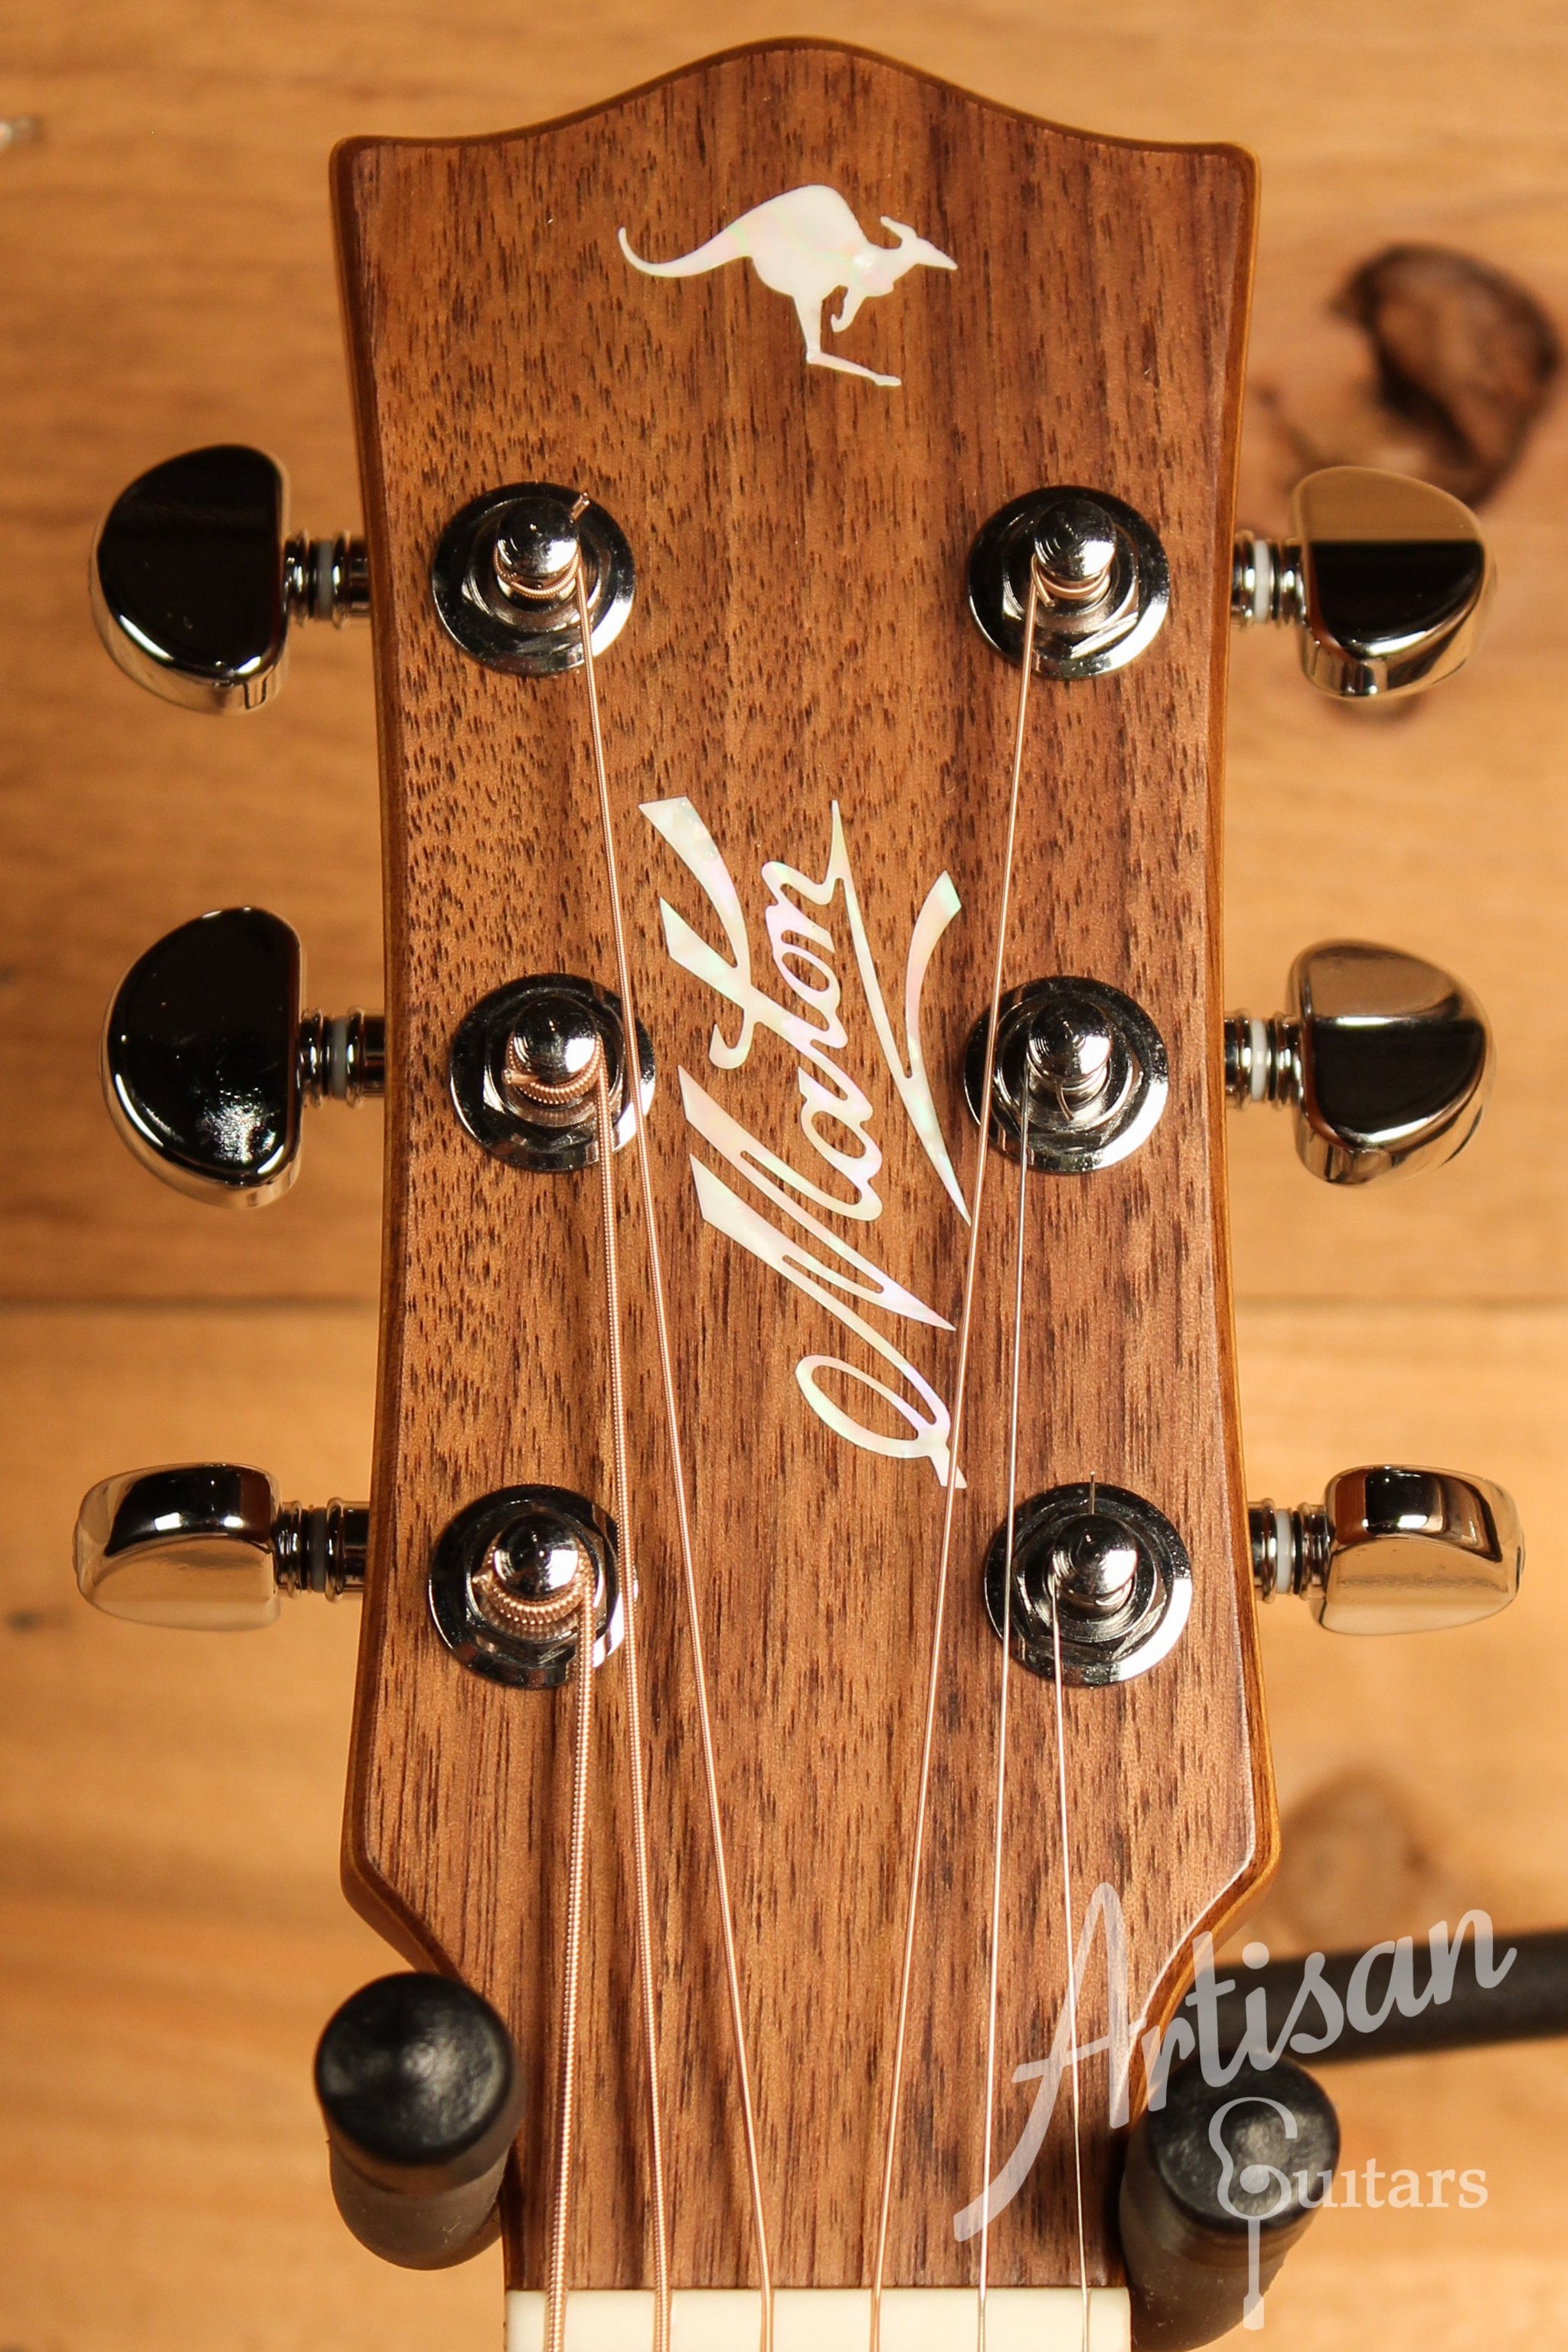 Maton EBG 808C TE Tommy Emmanuel Signature Guitar w/ Cutaway ID-12570 - Artisan Guitars